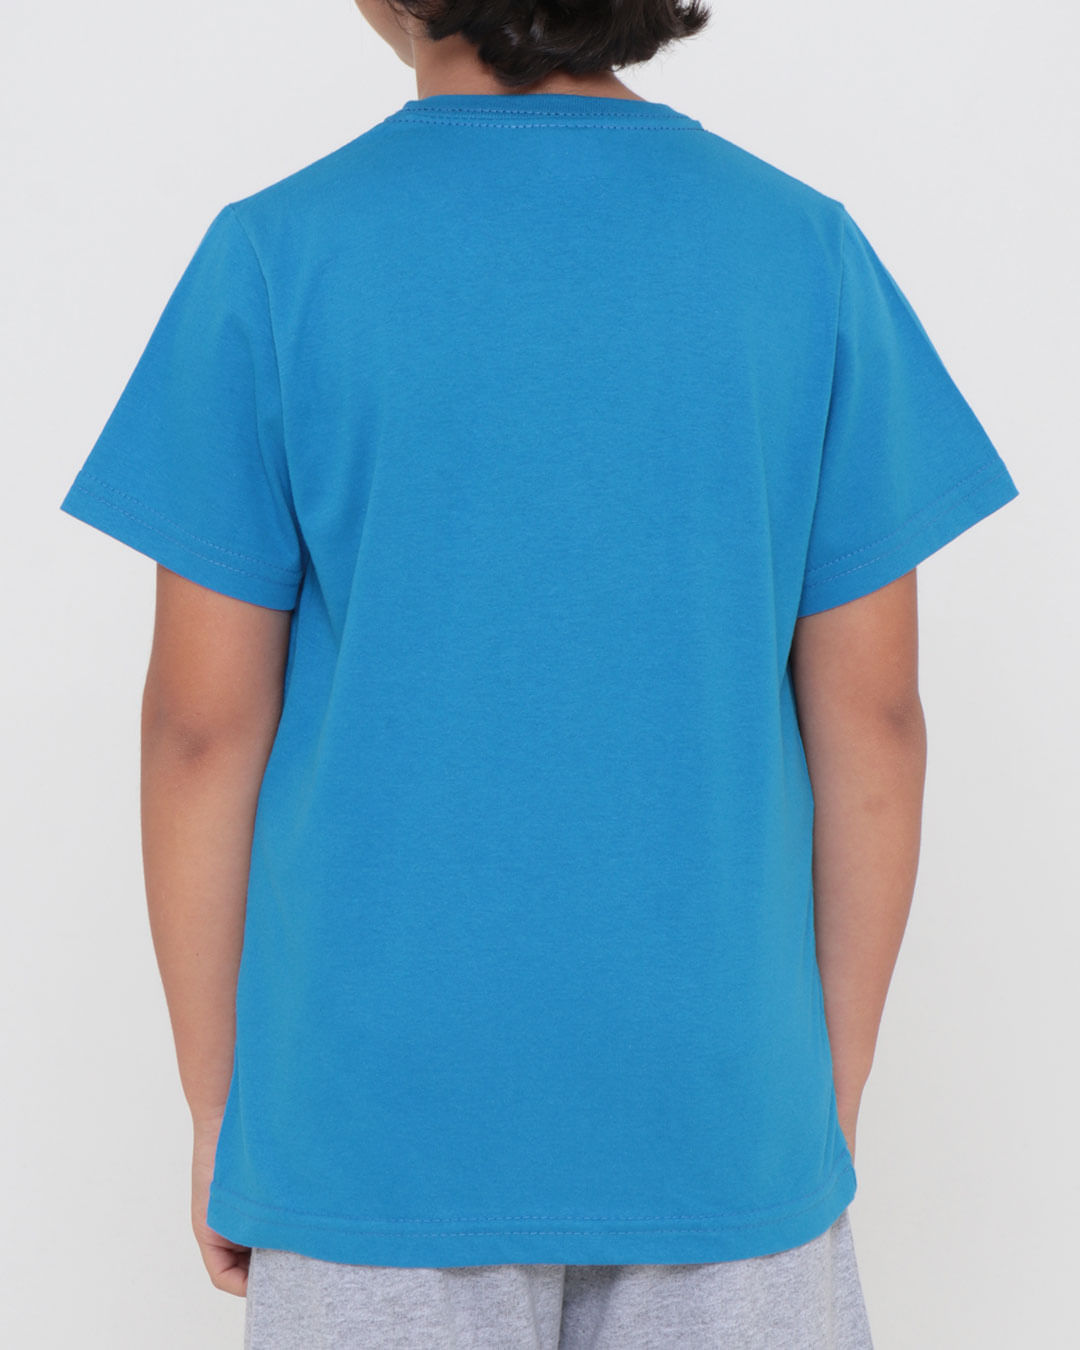 Camiseta-Infantil-Estampa-Skate-Manga-Curta-Azul